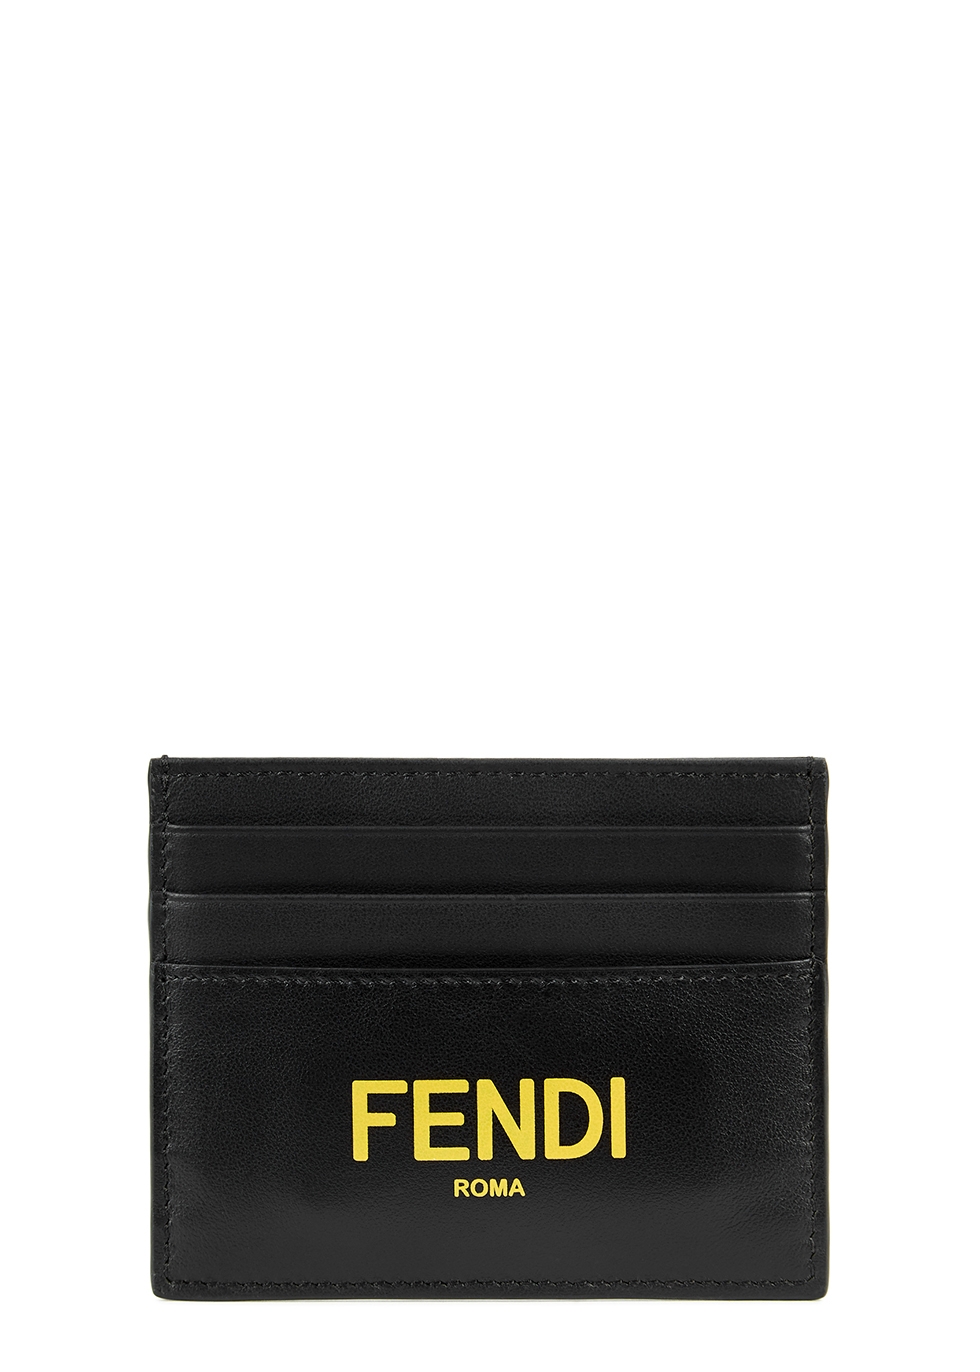 Fendi Black leather card holder 